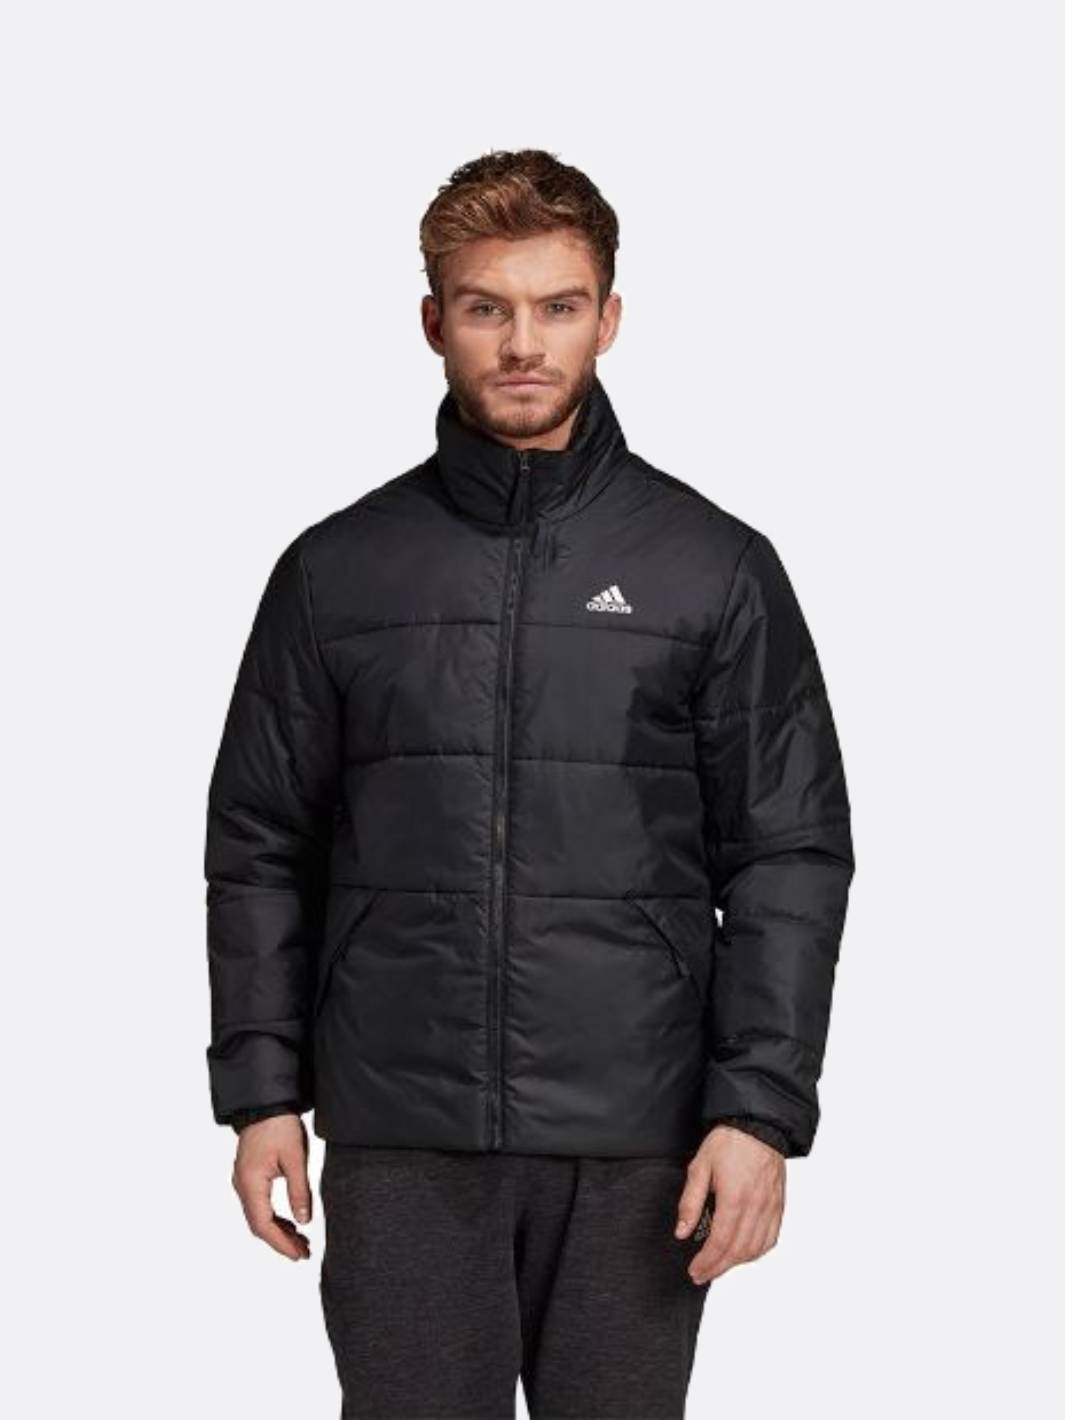 adidas - Men - Insulated BSC Jacket - Black/Black - Nohble